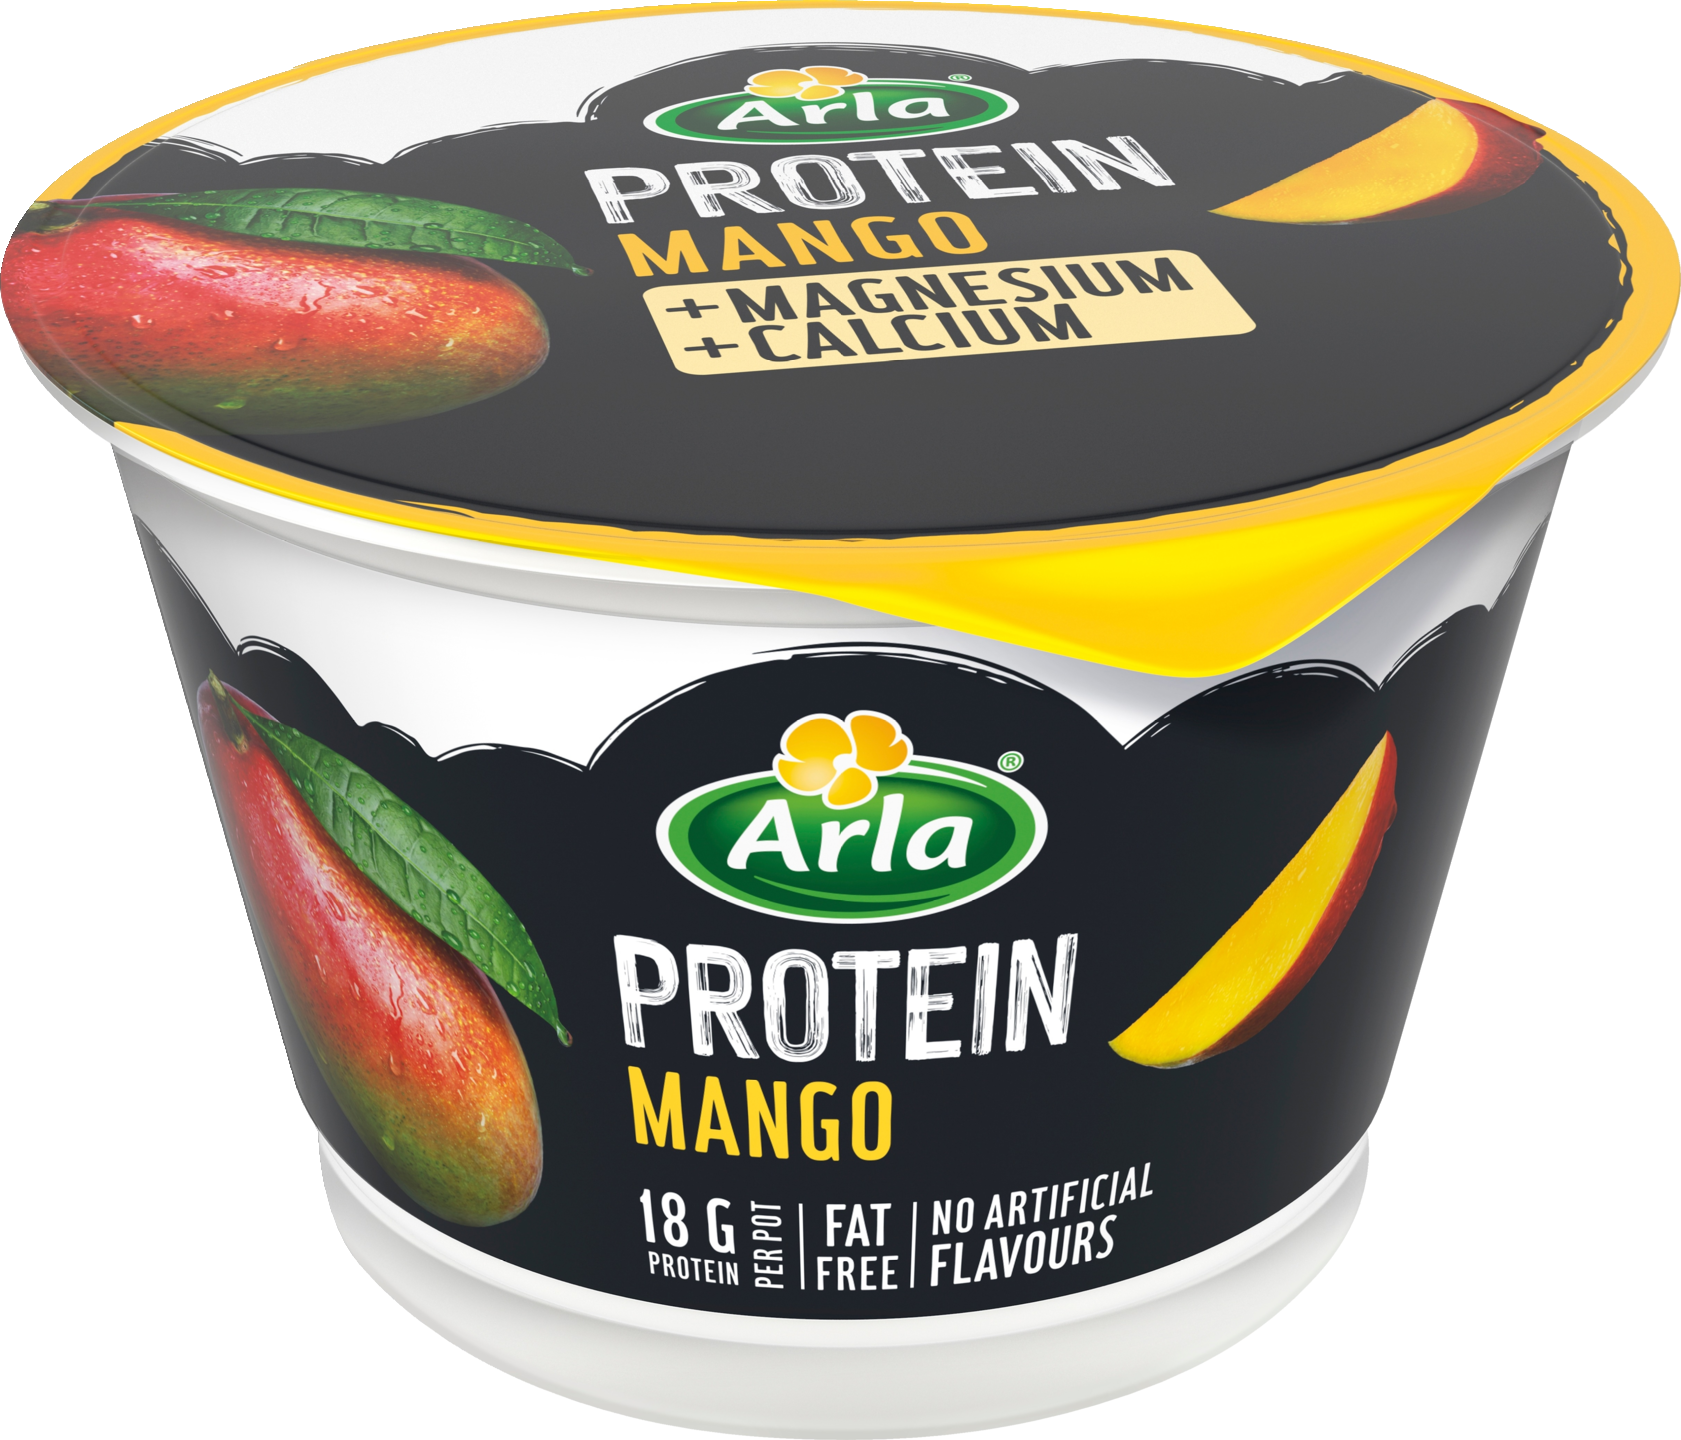 Arla Protein rahka 200g mango laktoositon